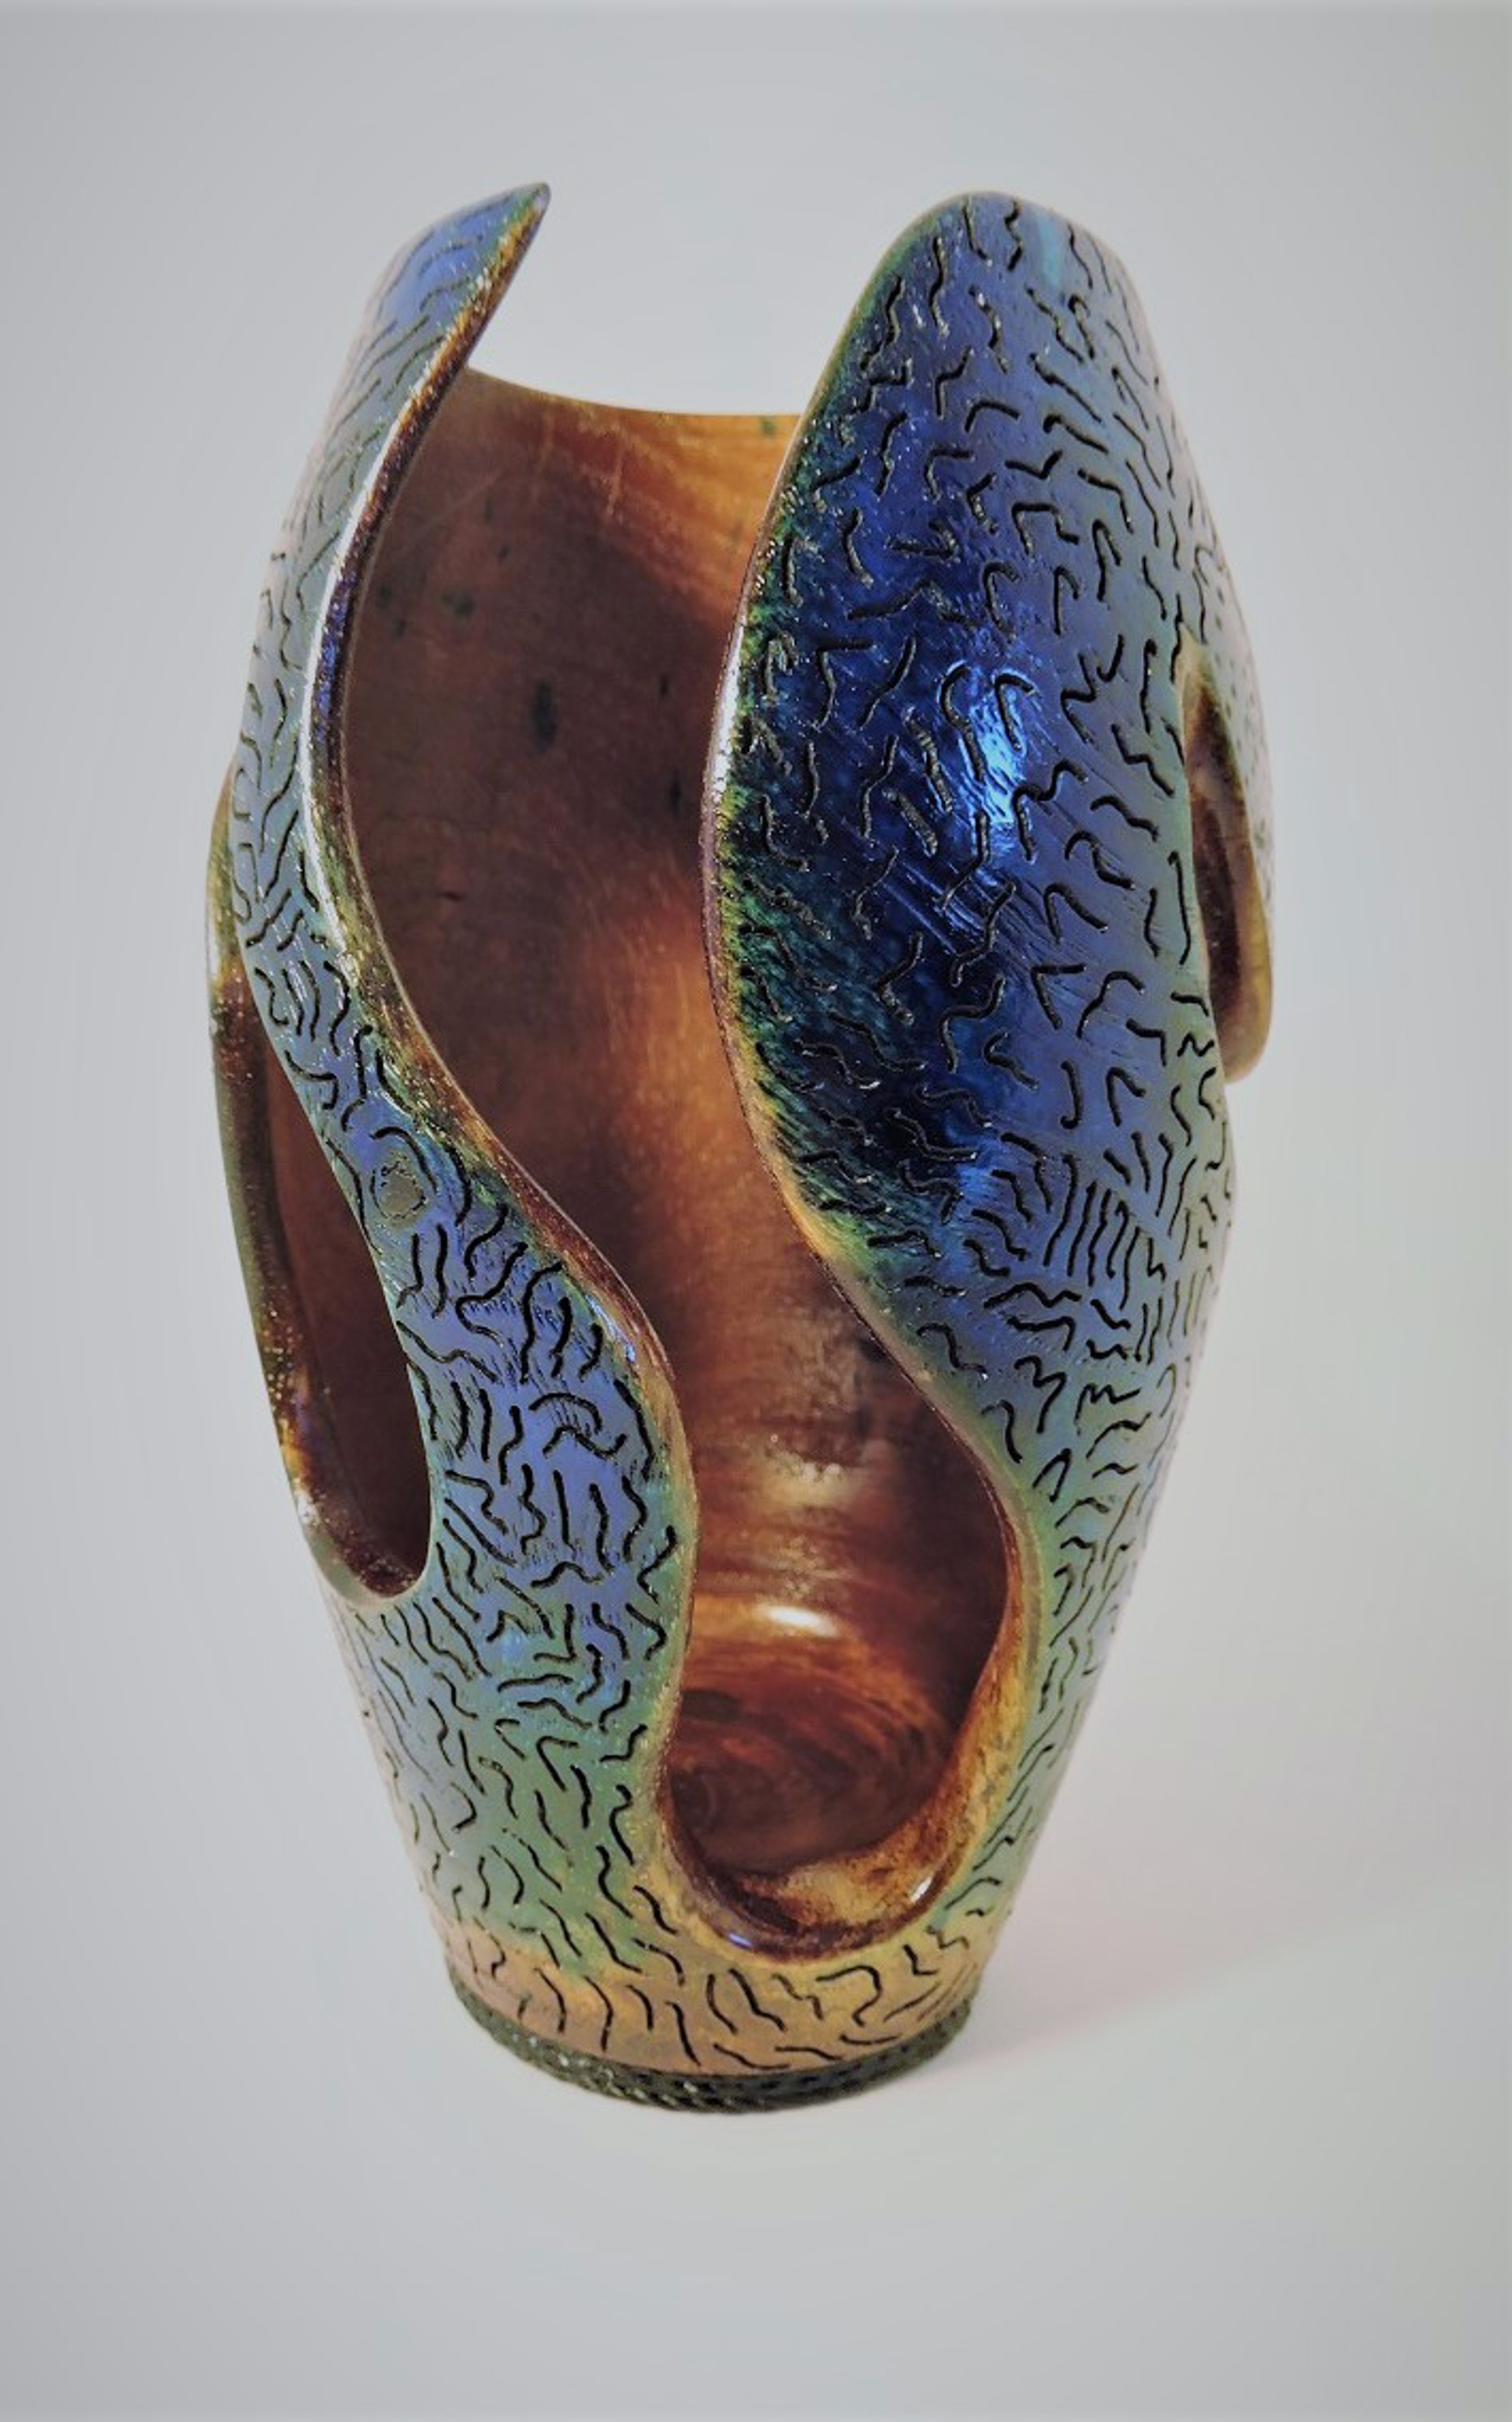 Ocean Sculptured Vase by Jim Scott